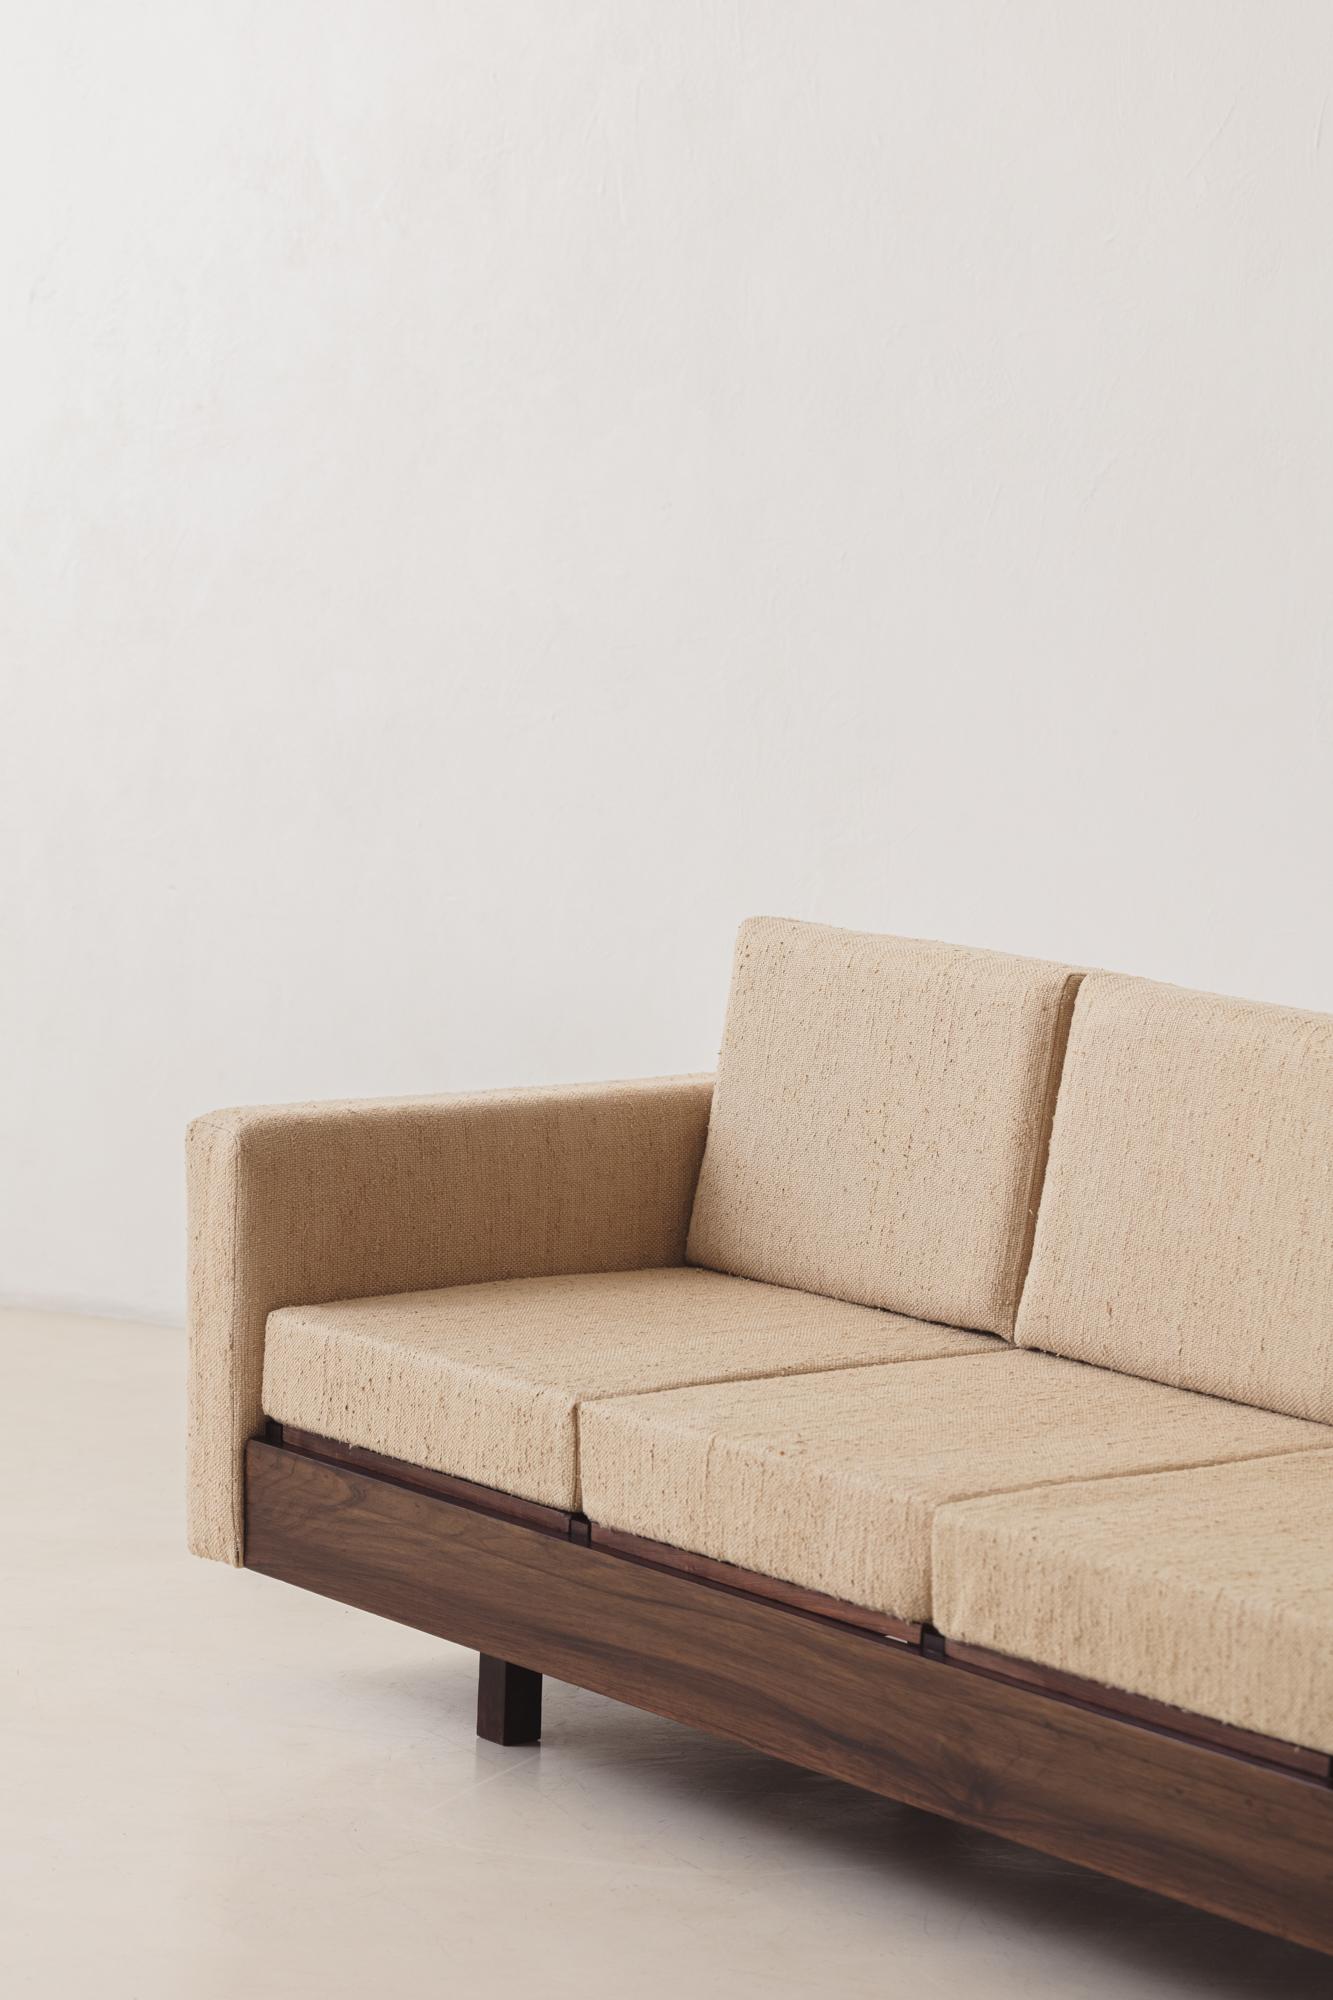 Hand-Woven Brazilian Rosewood Sofa by Celina Decorações, Midcentury Brazilian Design, 1960s For Sale